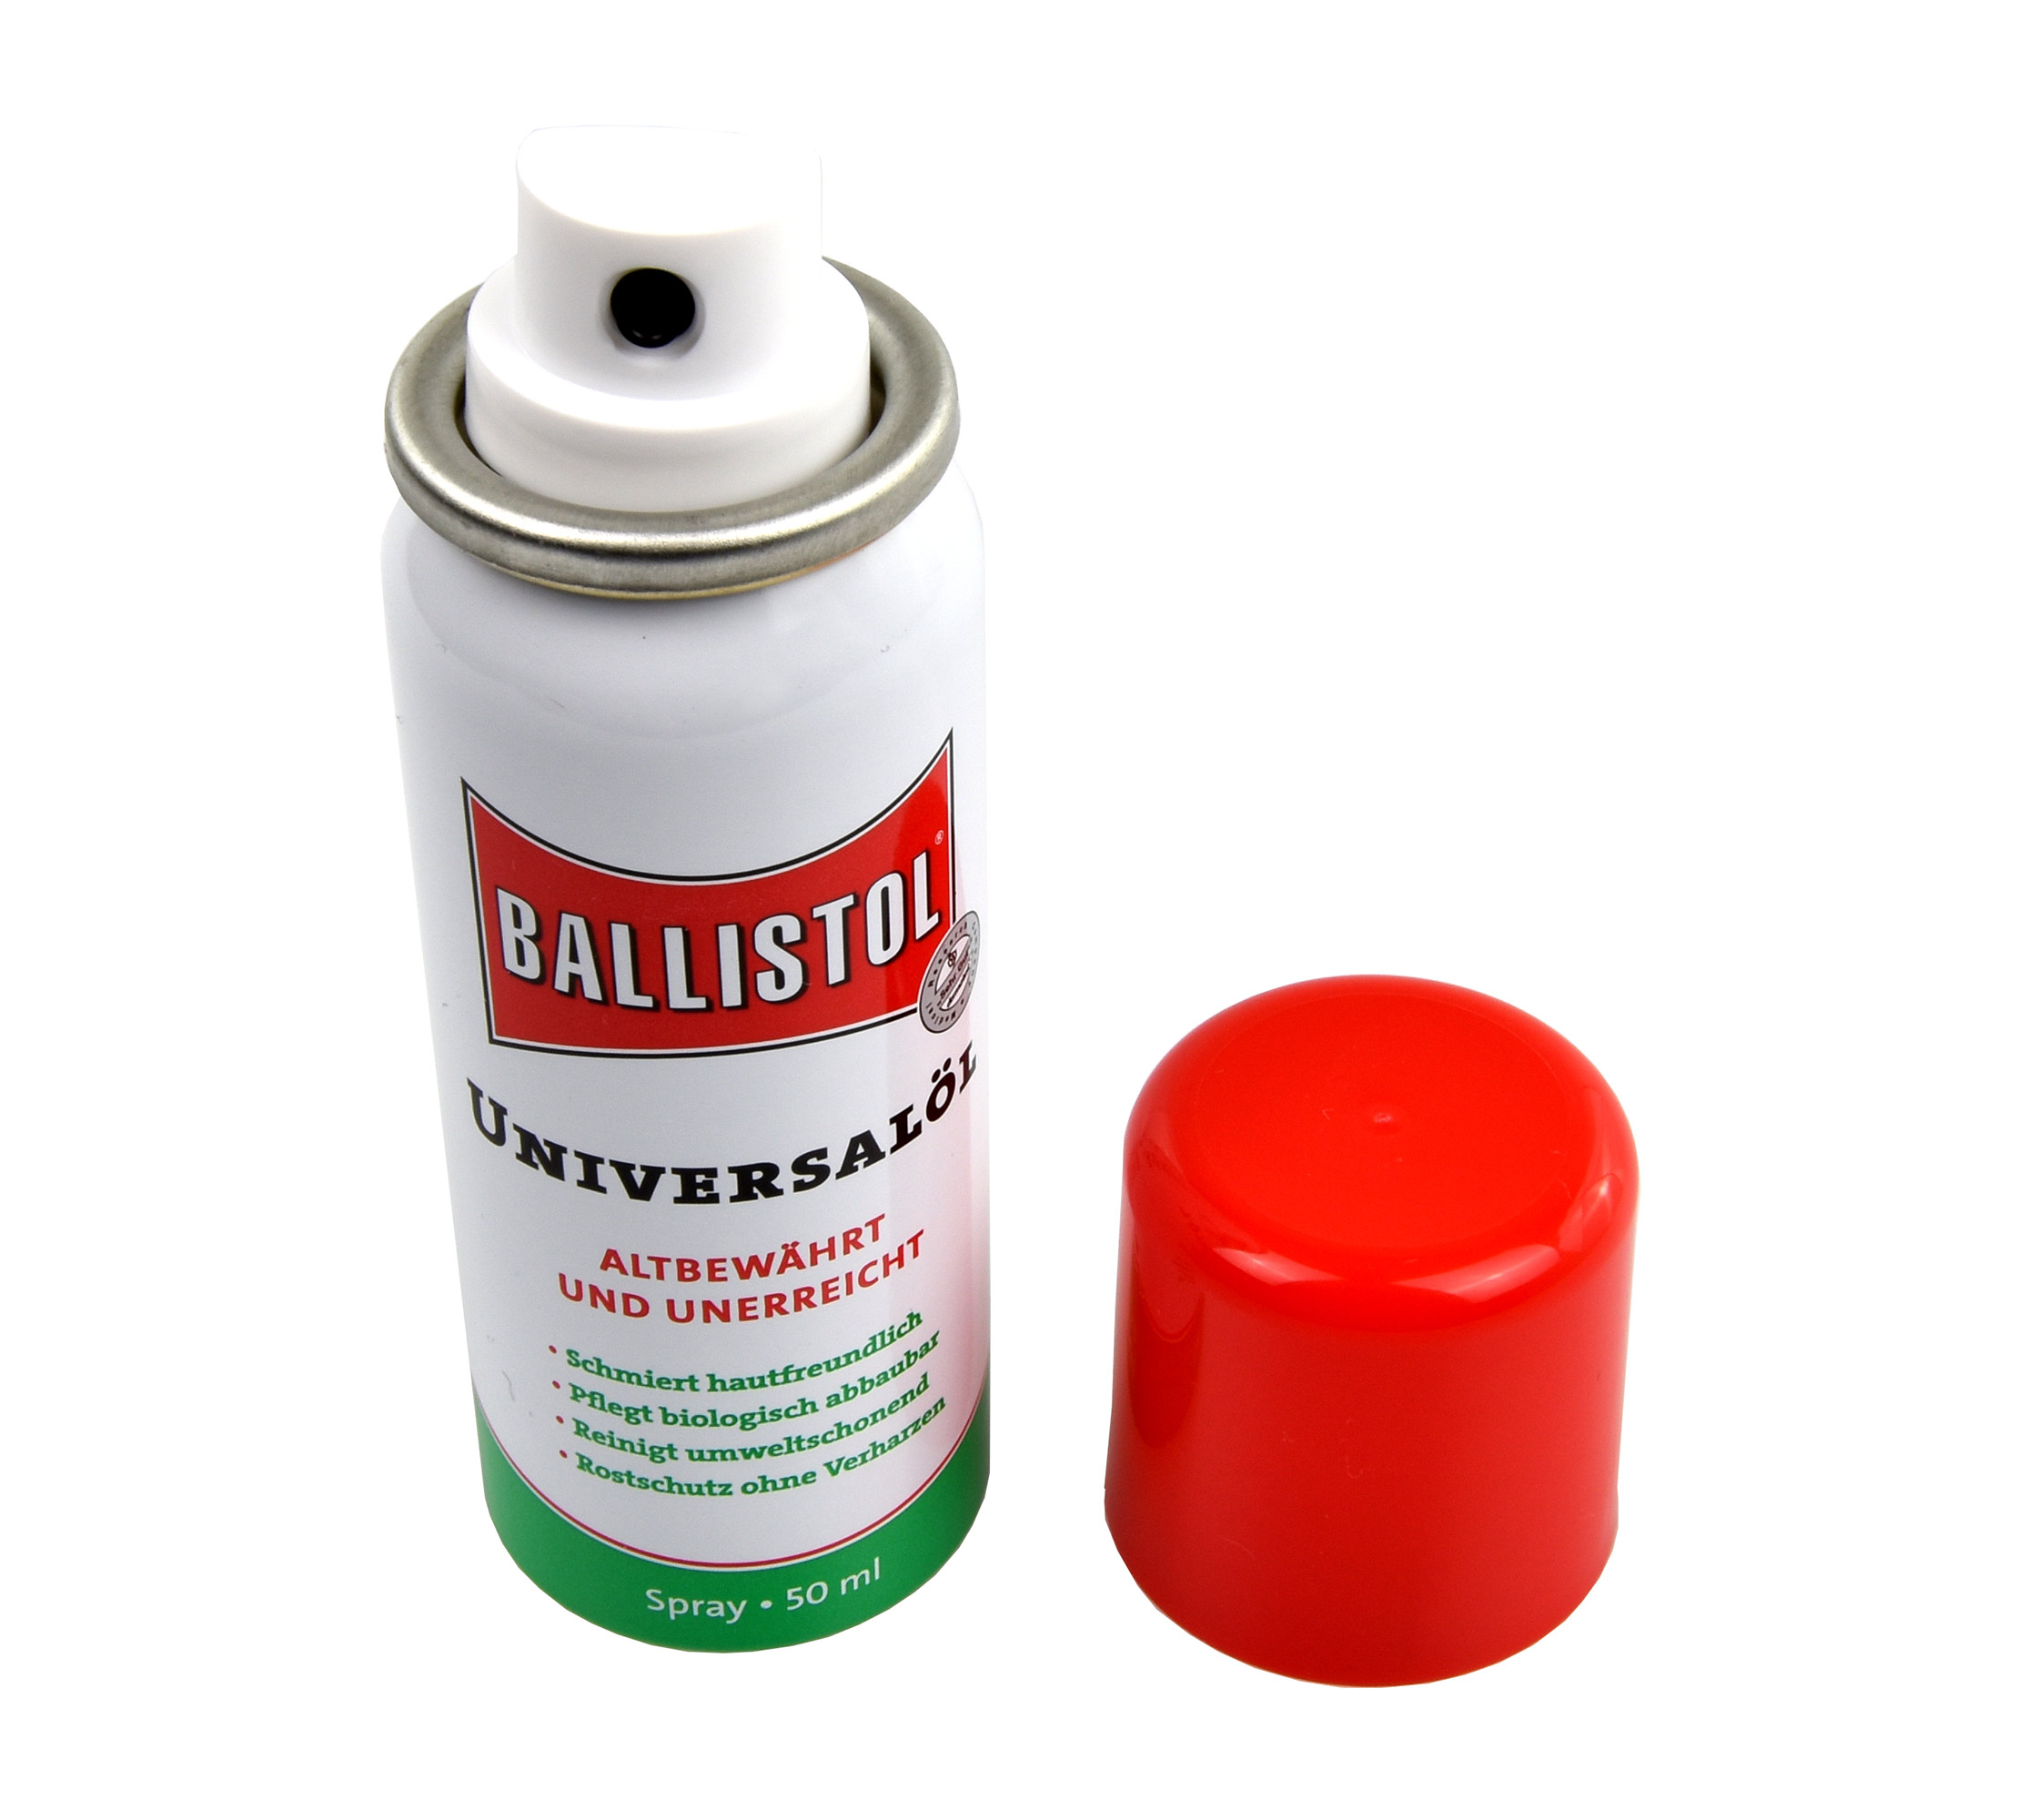 Ballistol Lubricant Spray for Foosball Rods